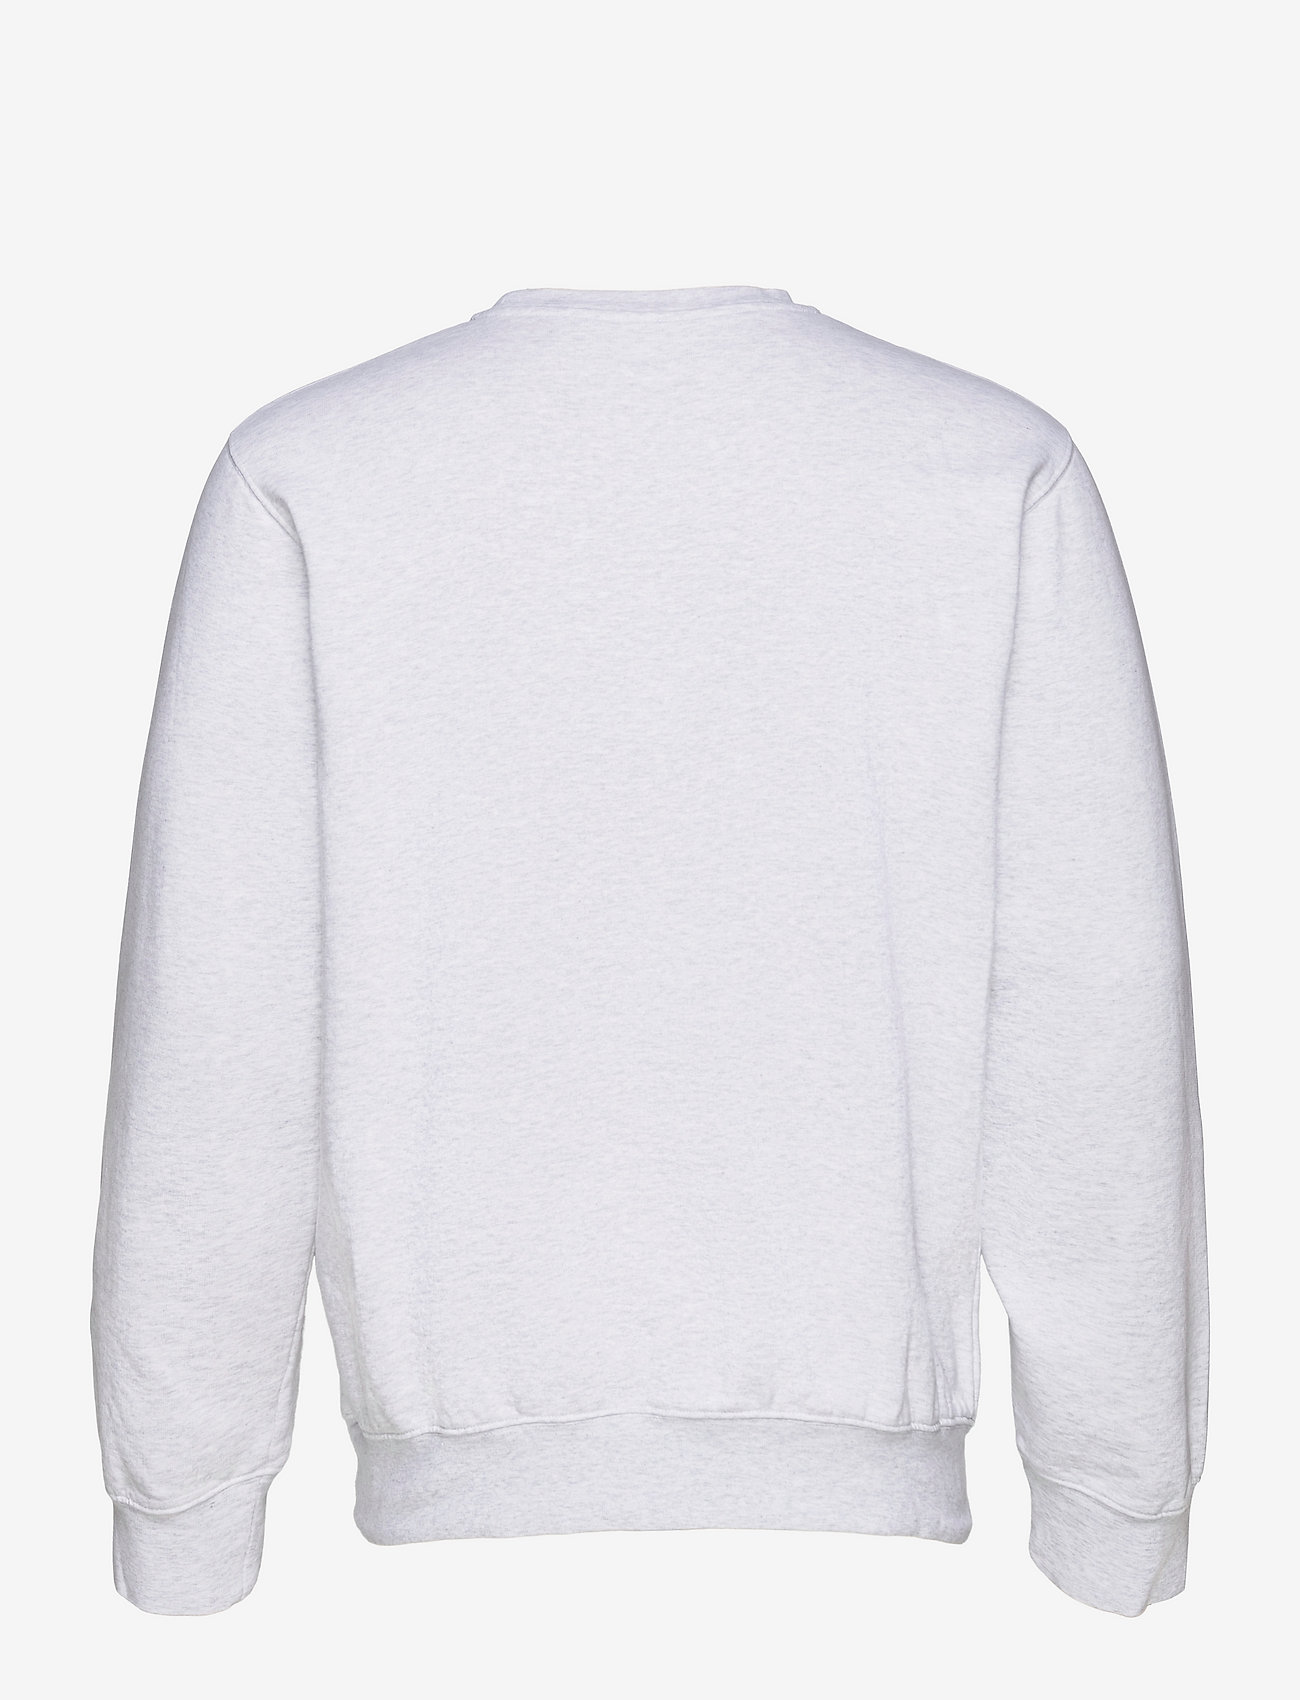 HAN Kjøbenhavn - Casual Crew - džemperi ar kapuci - light grey melange logo - 1